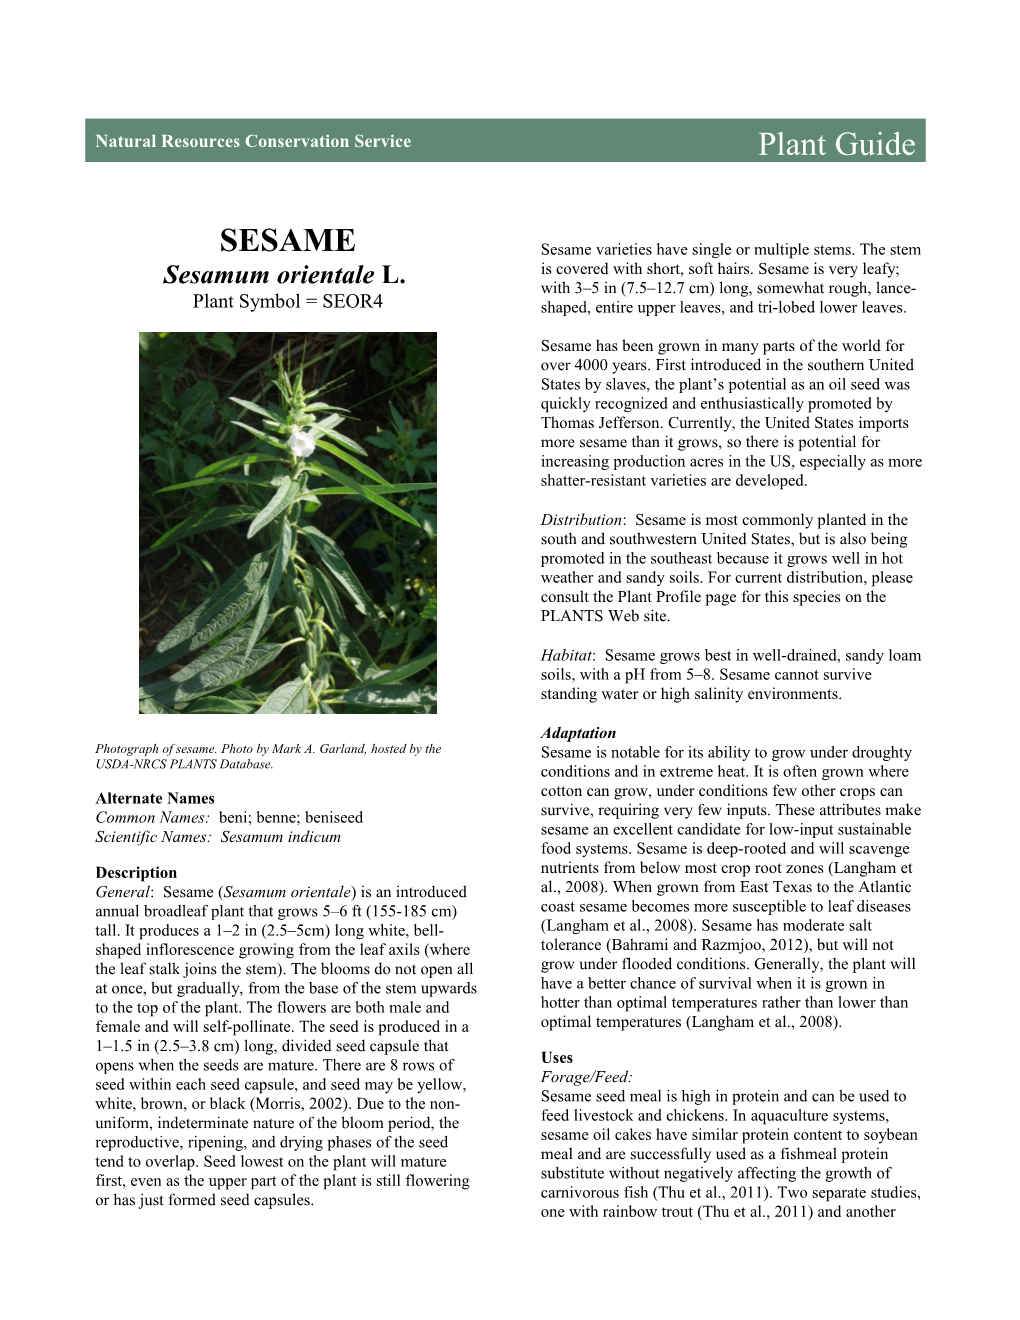 Sesame (Sesamum Orientale) Plant Guide